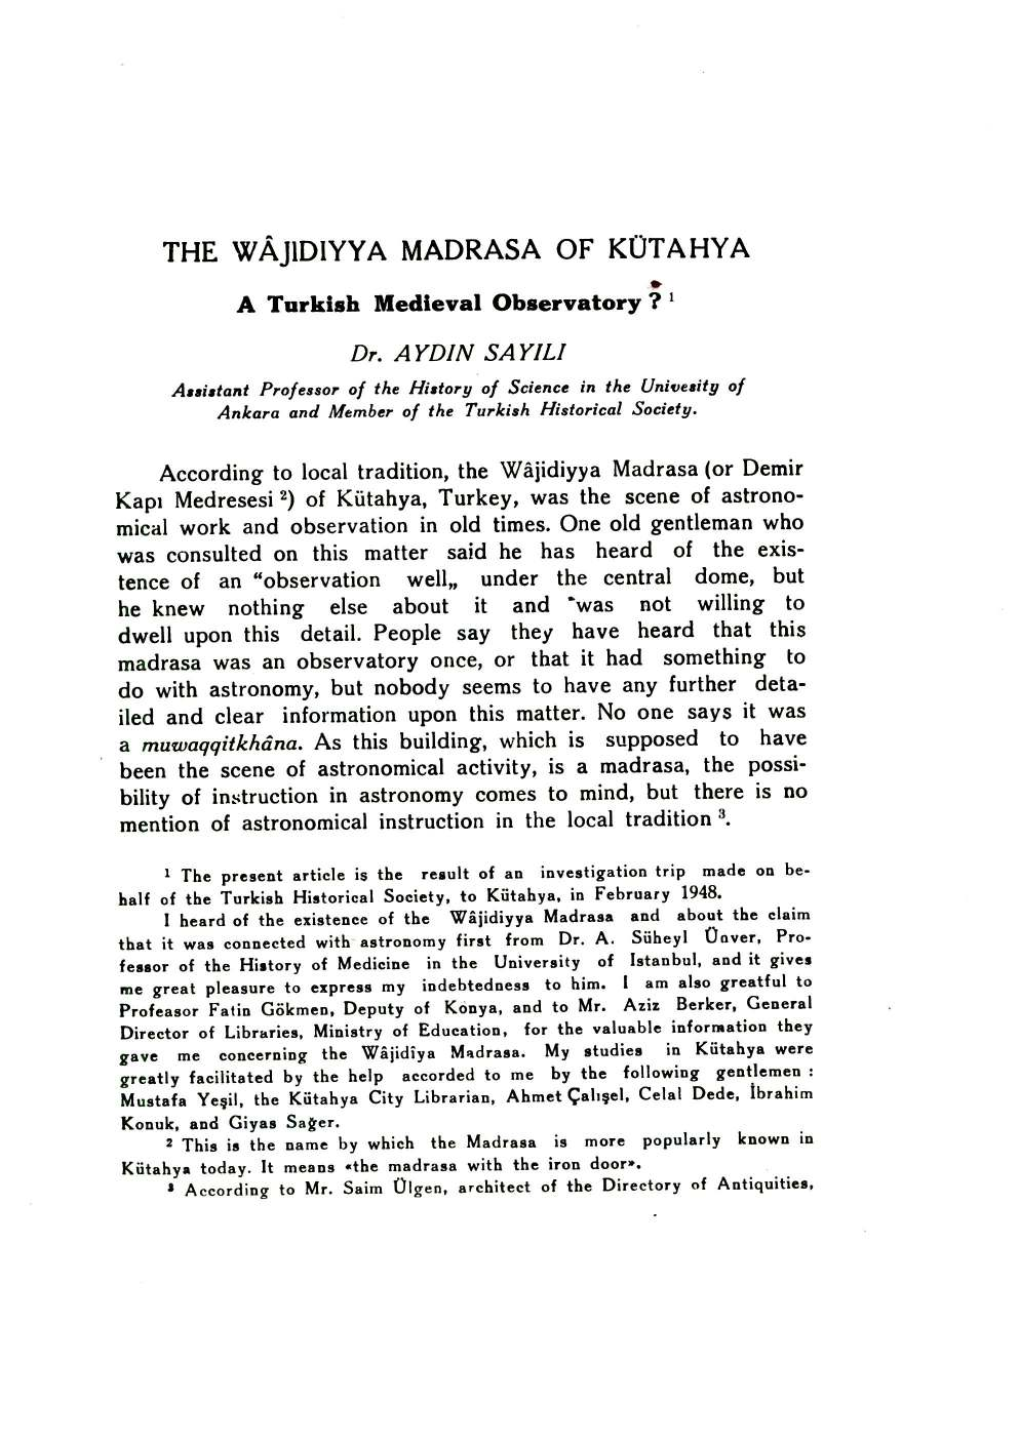 The Waj1diyya Madrasa of Kota Hya